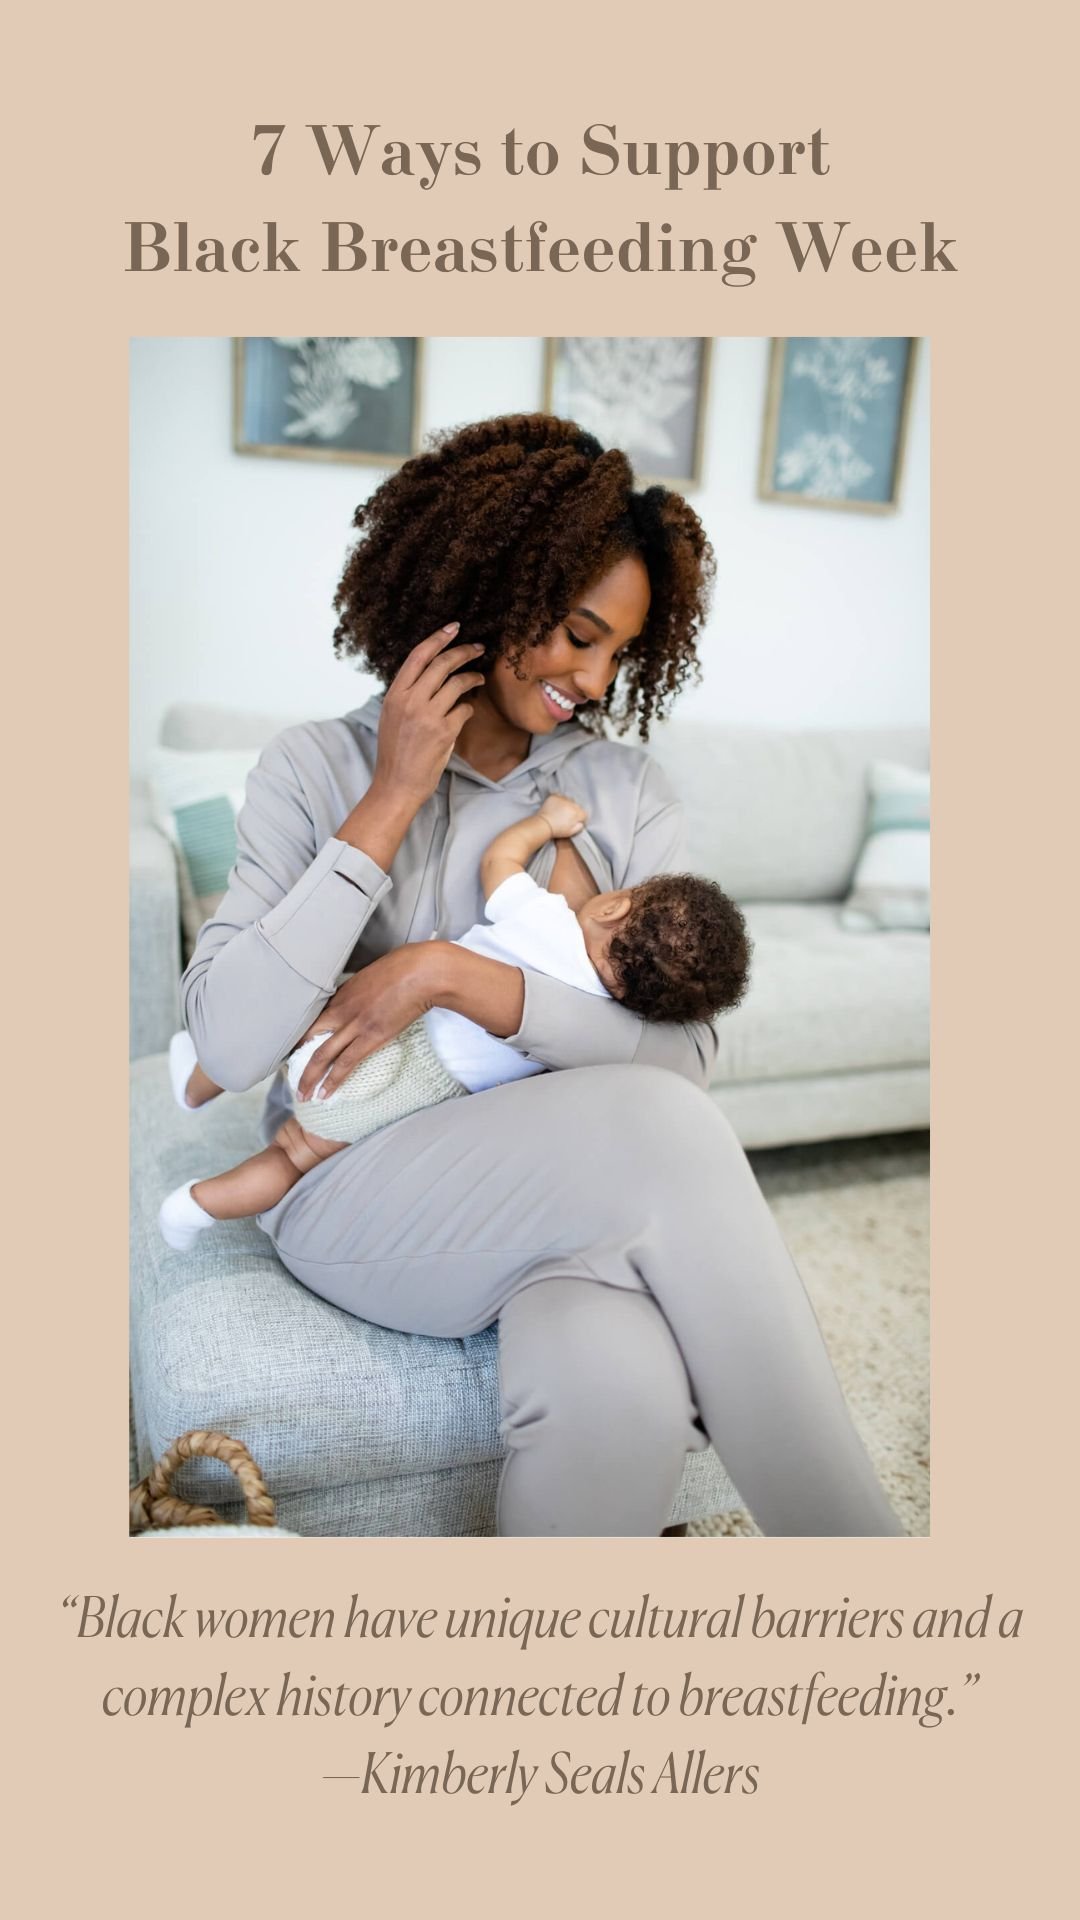 7 Ways to Support Black Breastfeeding Week